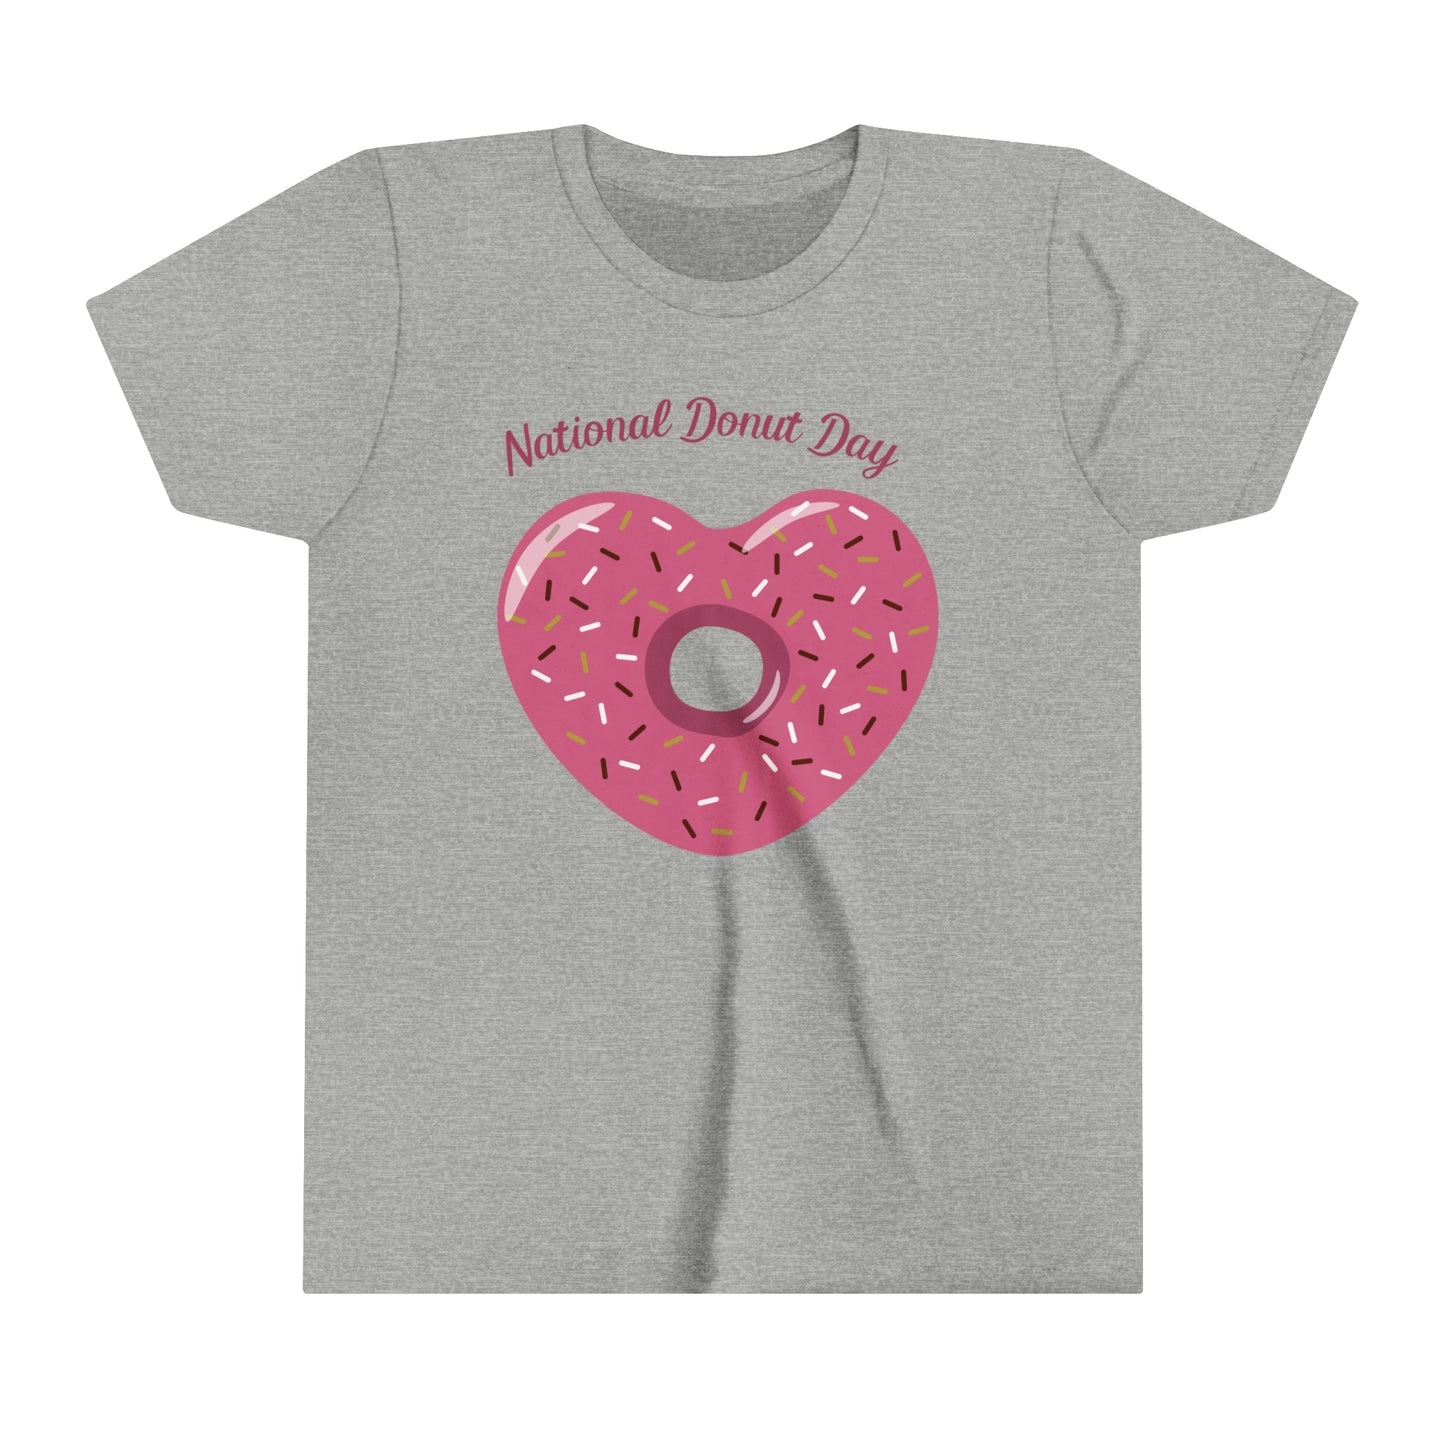 National Donut Day Heart Kids T-shirt